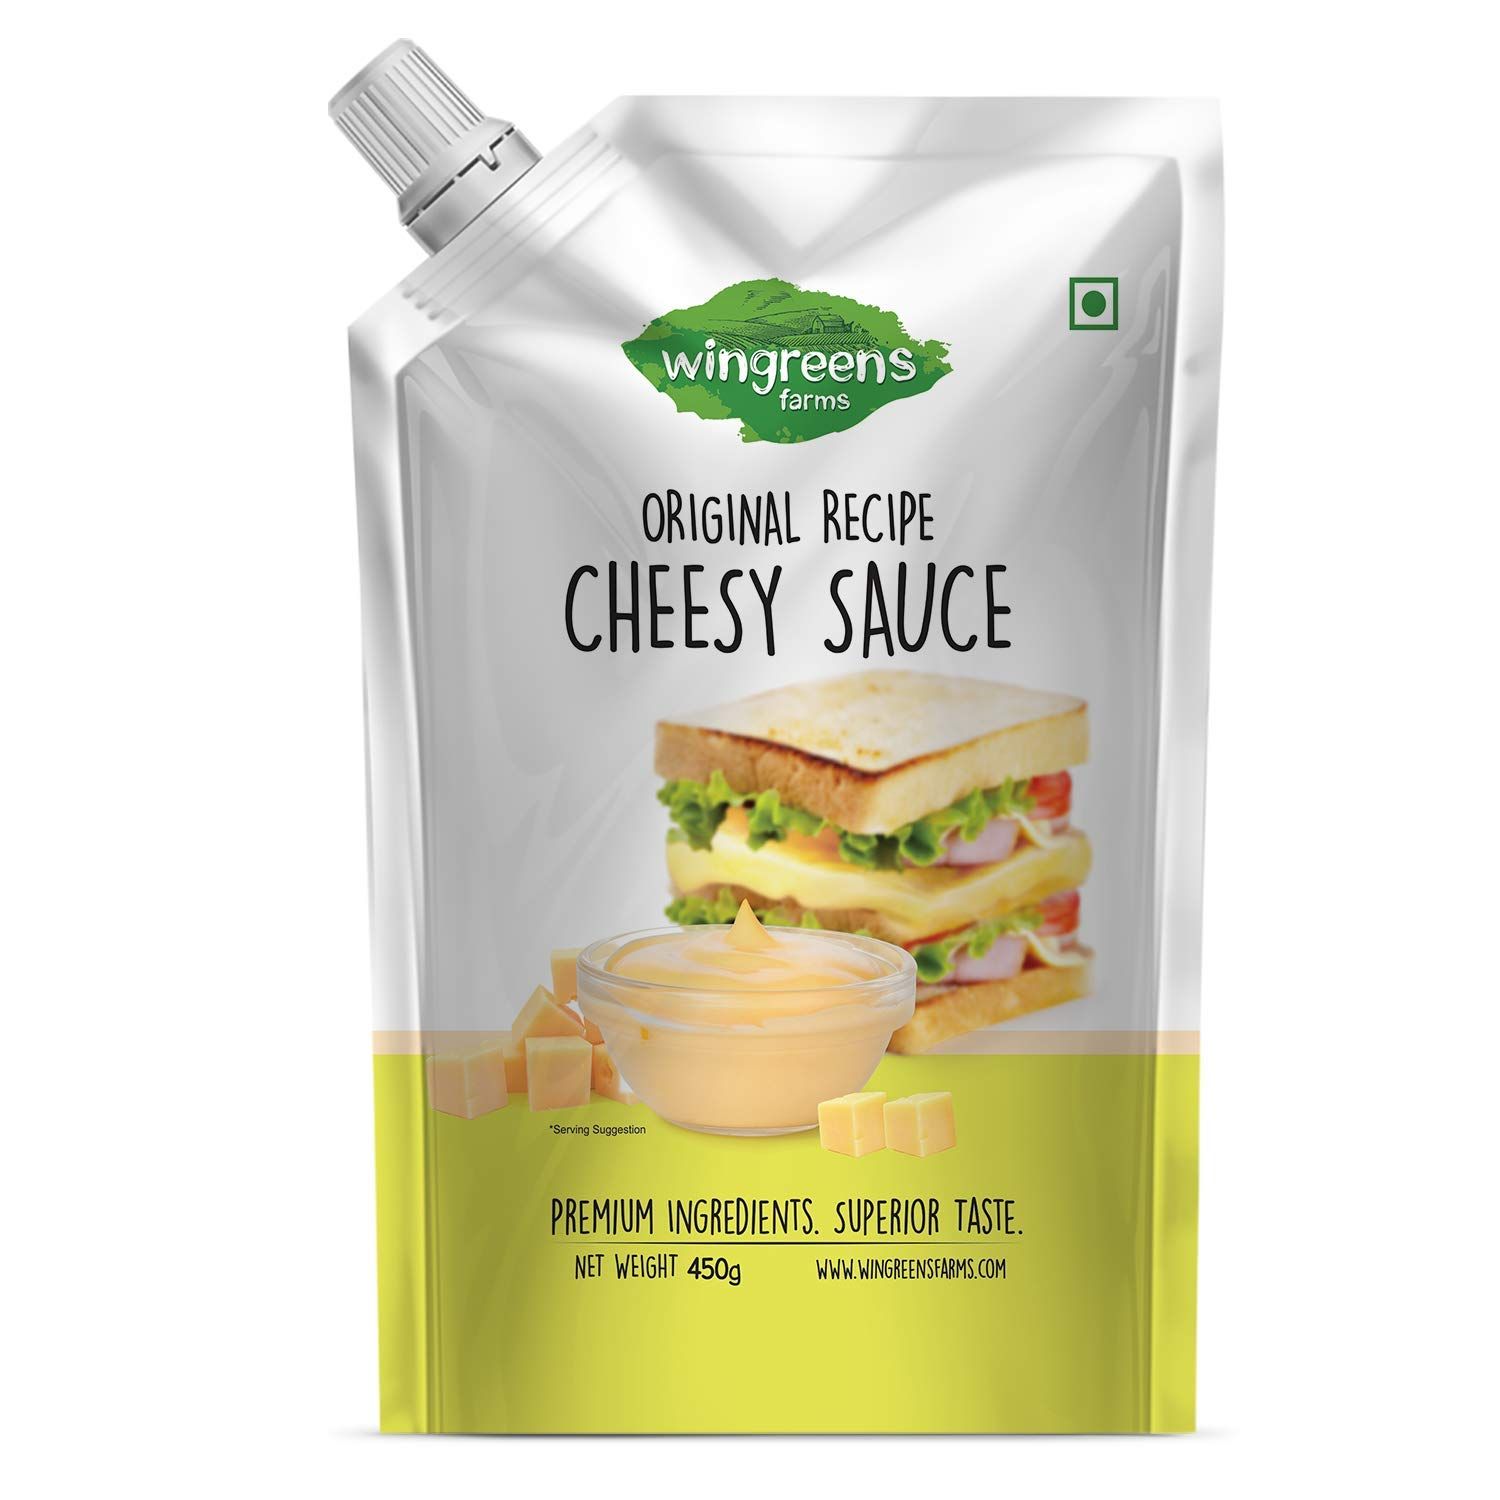 Wingreens Farms Cheesy Sauce Image